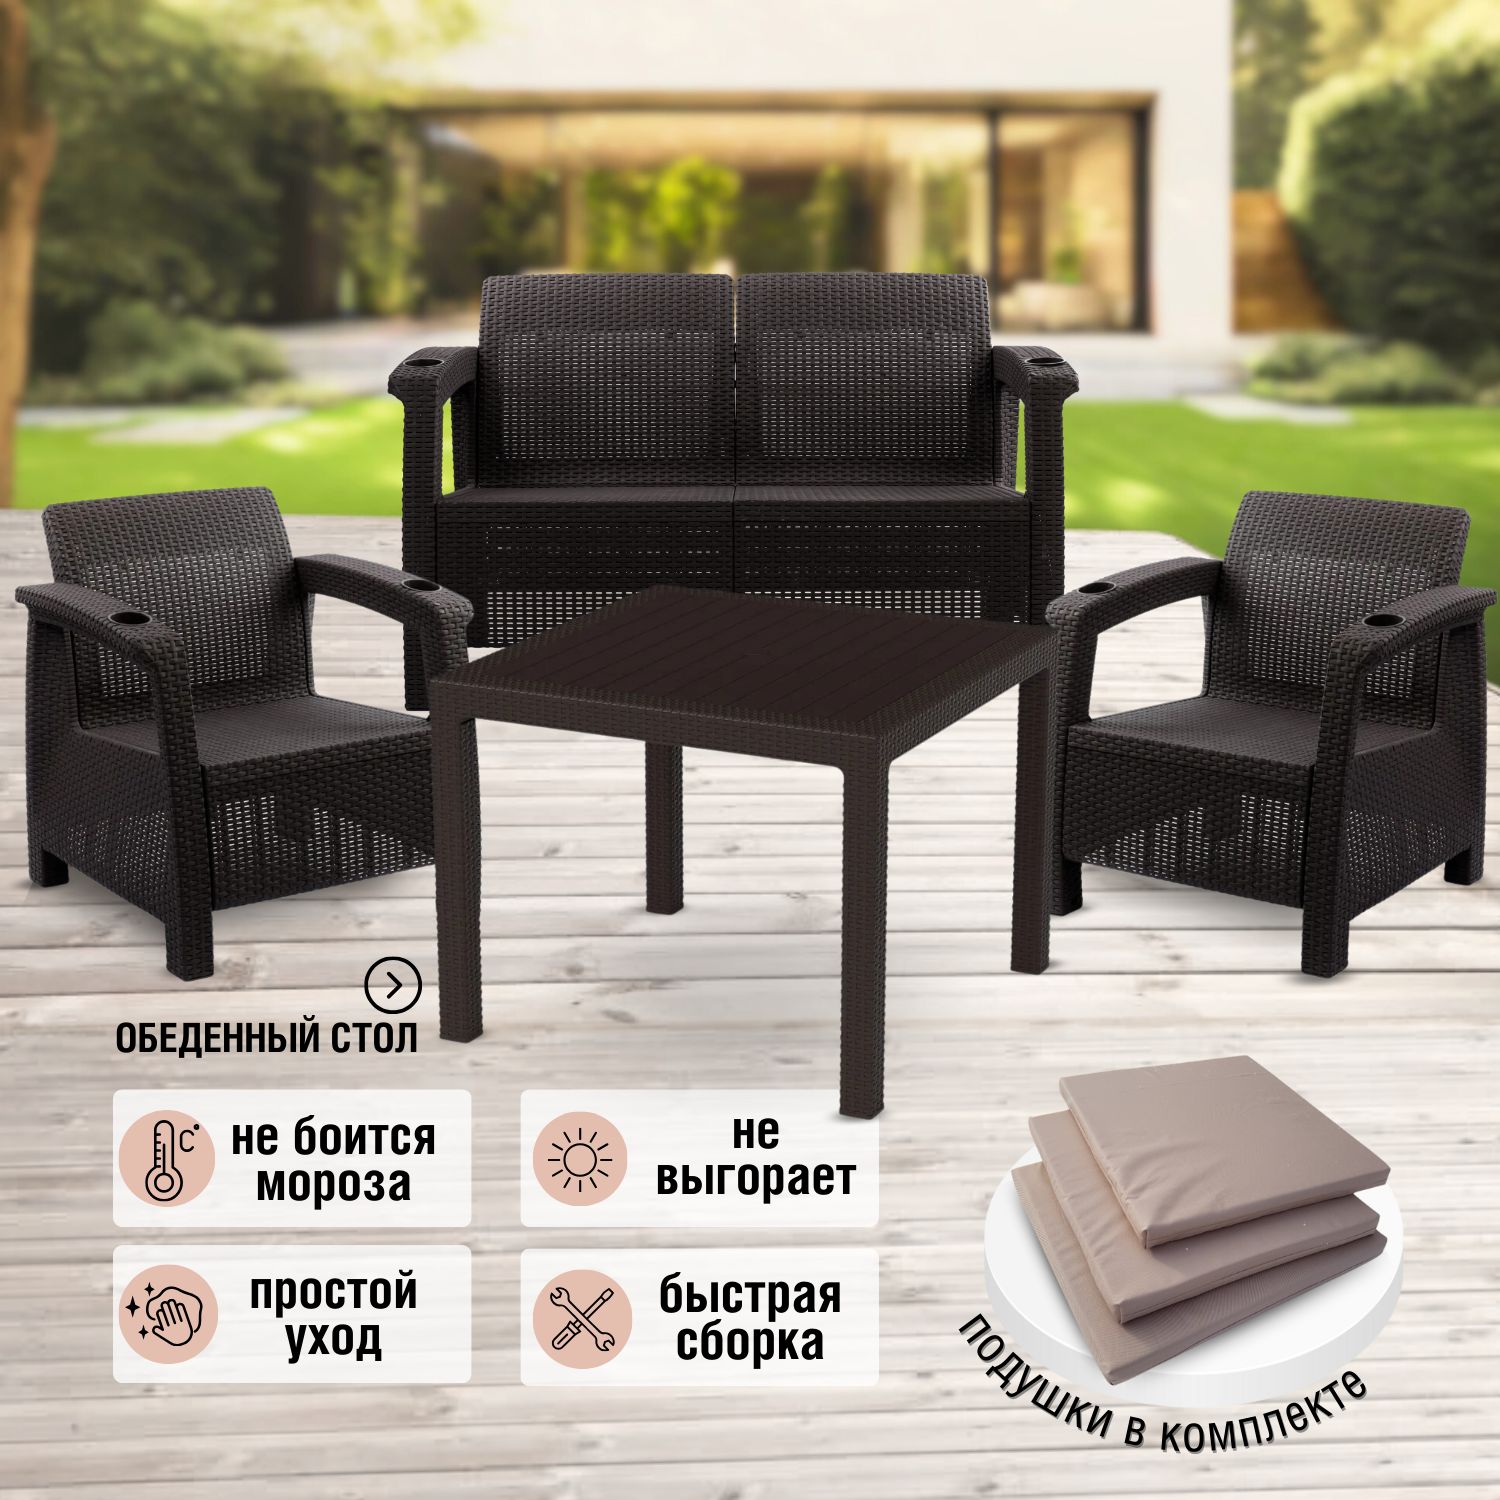 Комплект садовой мебели Альтернатива ViCtory RT0119 темно-коричневый диван+стол+2 кресла